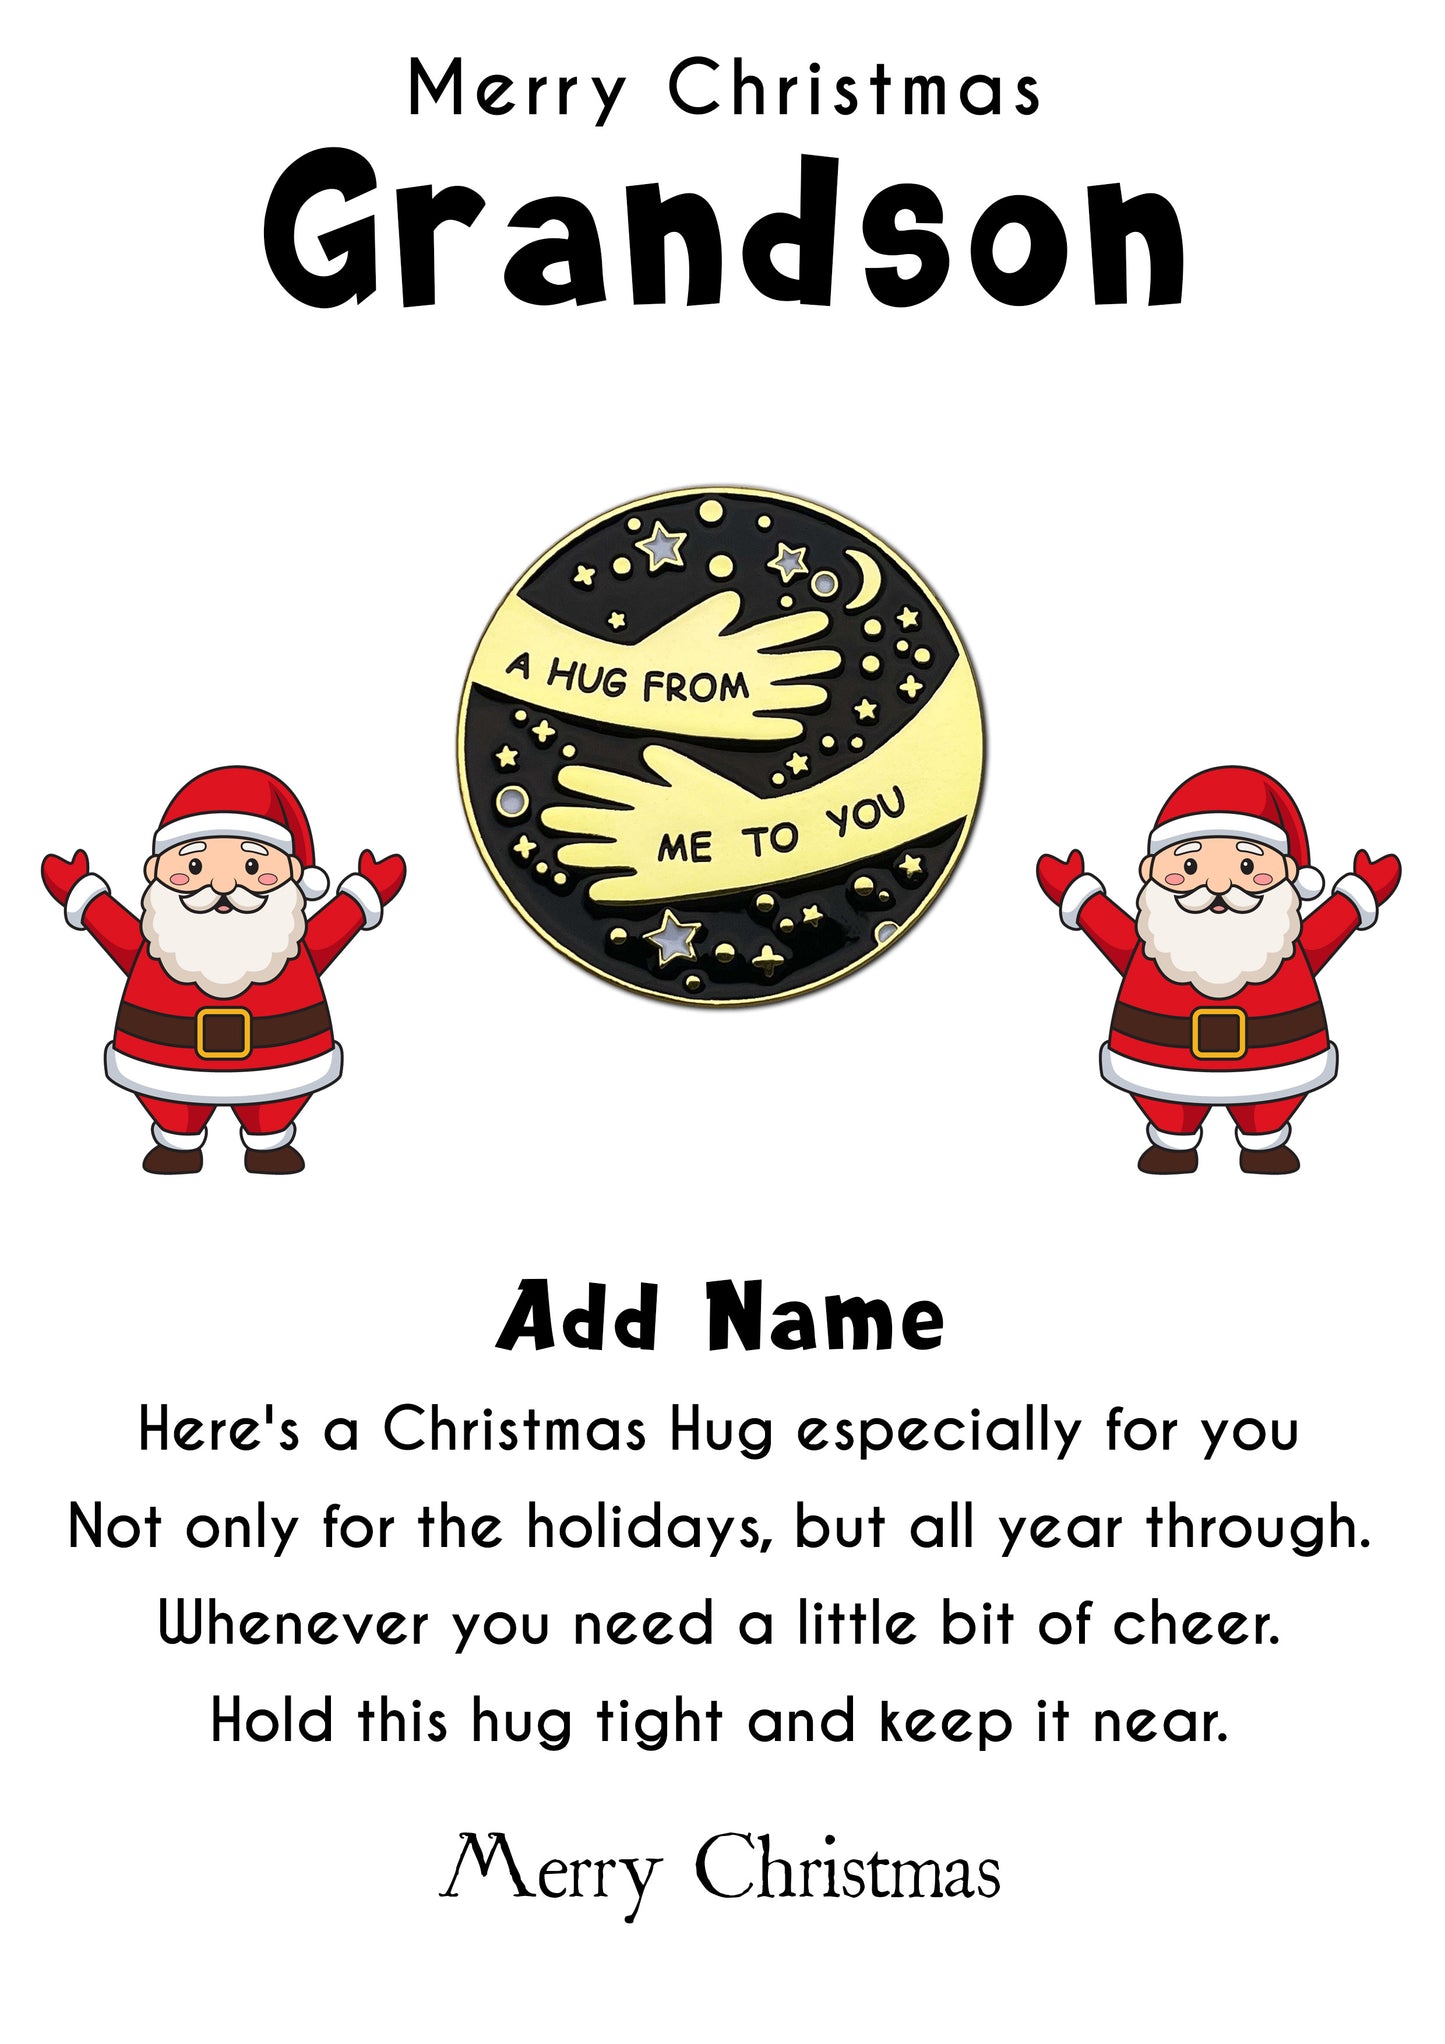 Santa Claus Hug Pin Badges & Personalised Grandson Message Card